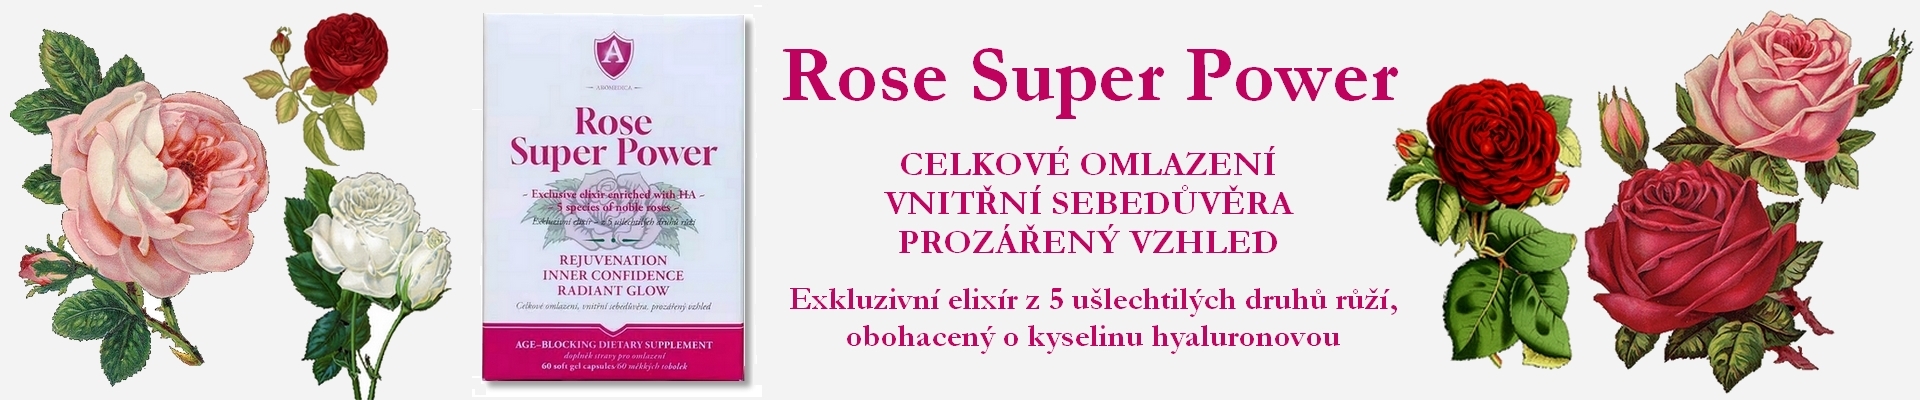 ROSE SUPER POWER2